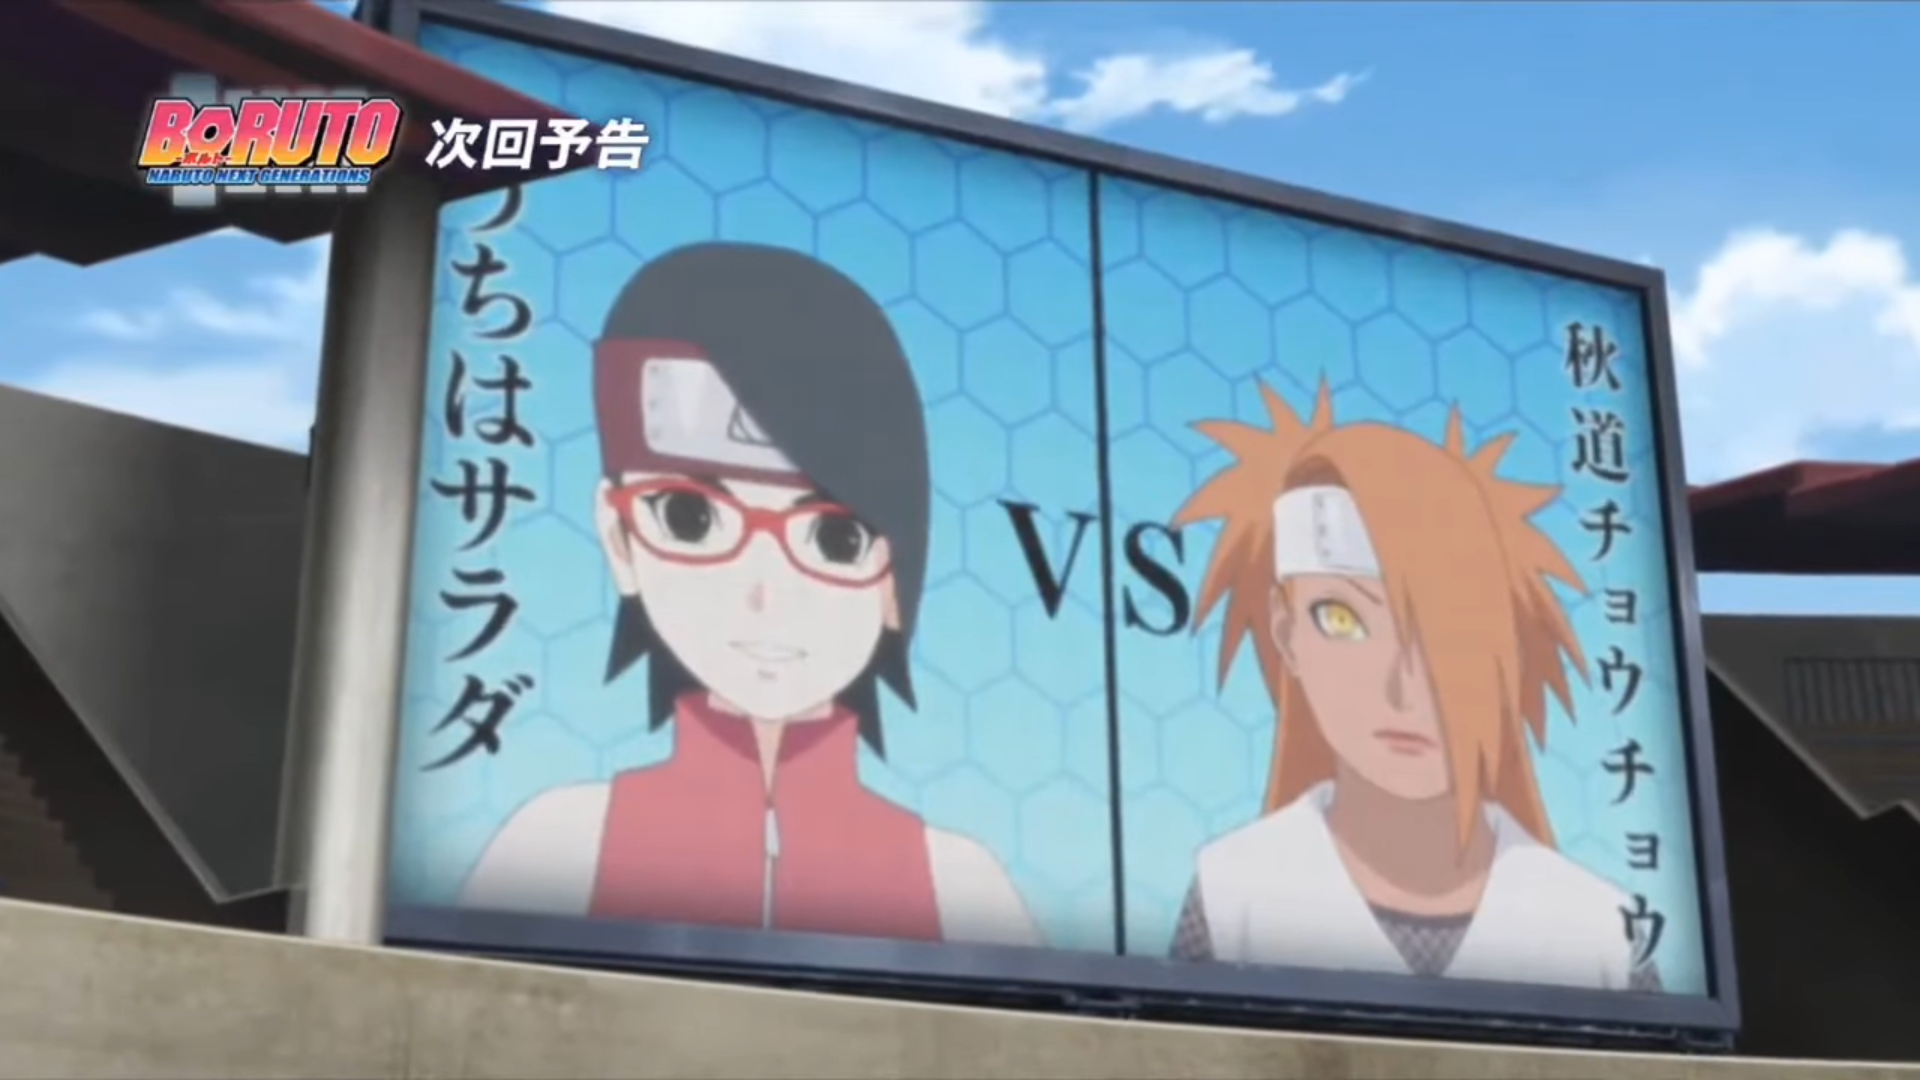 Boruto - Naruto Next Generations Episode 225 Release Date, Spoilers & Watch Online